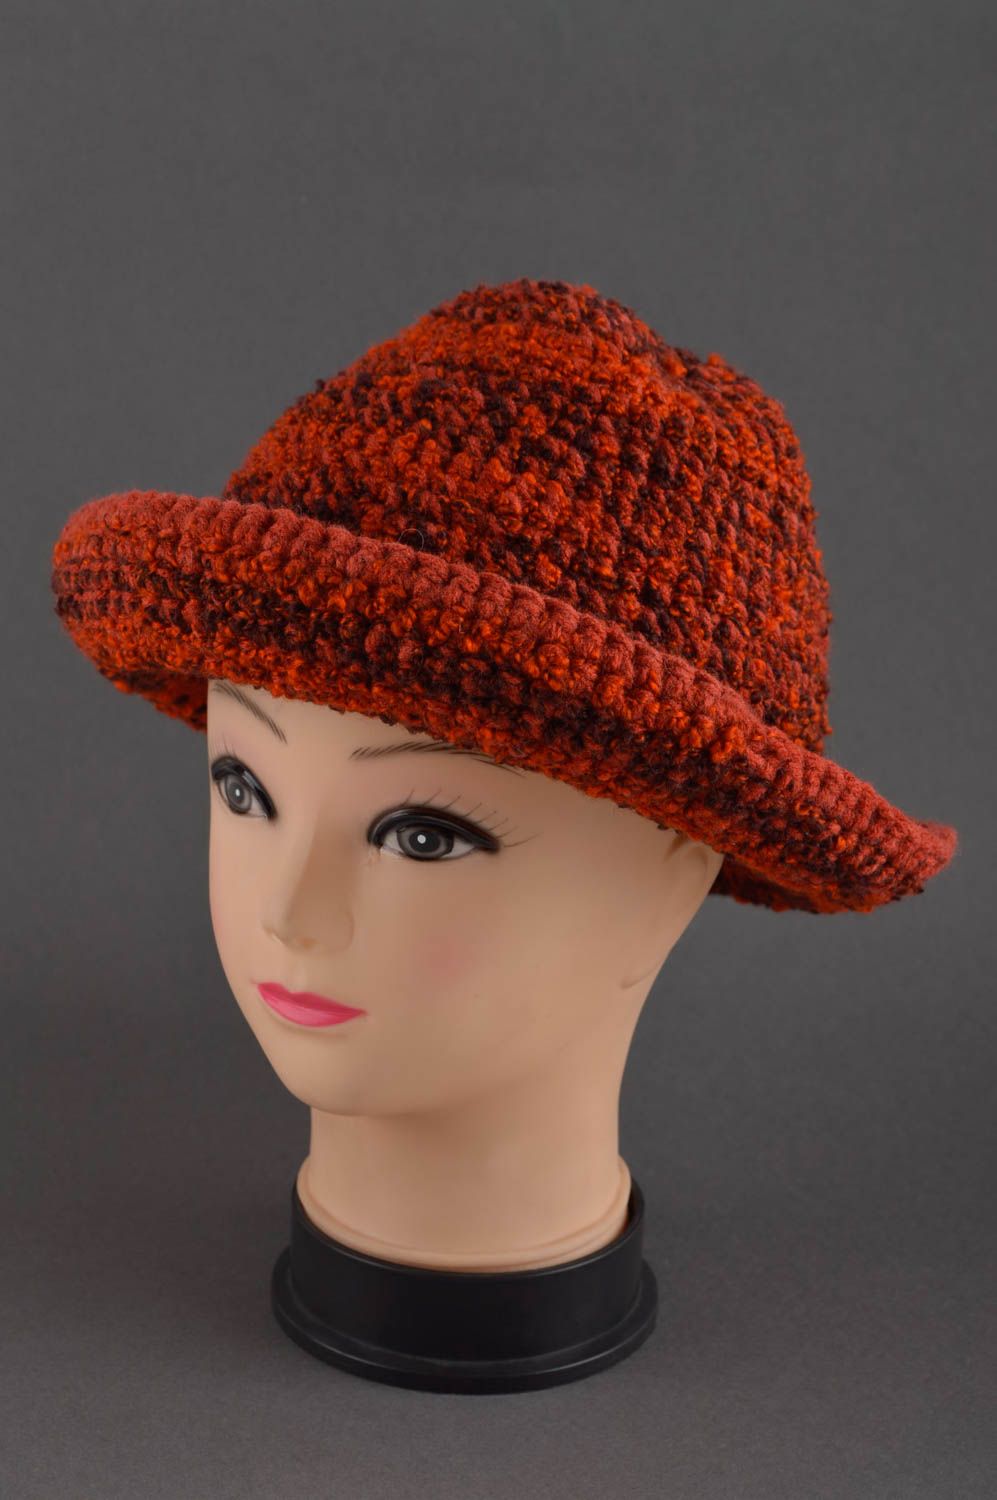 Handmade crochet hat womens hat accessories for women designer hats gift ideas photo 1